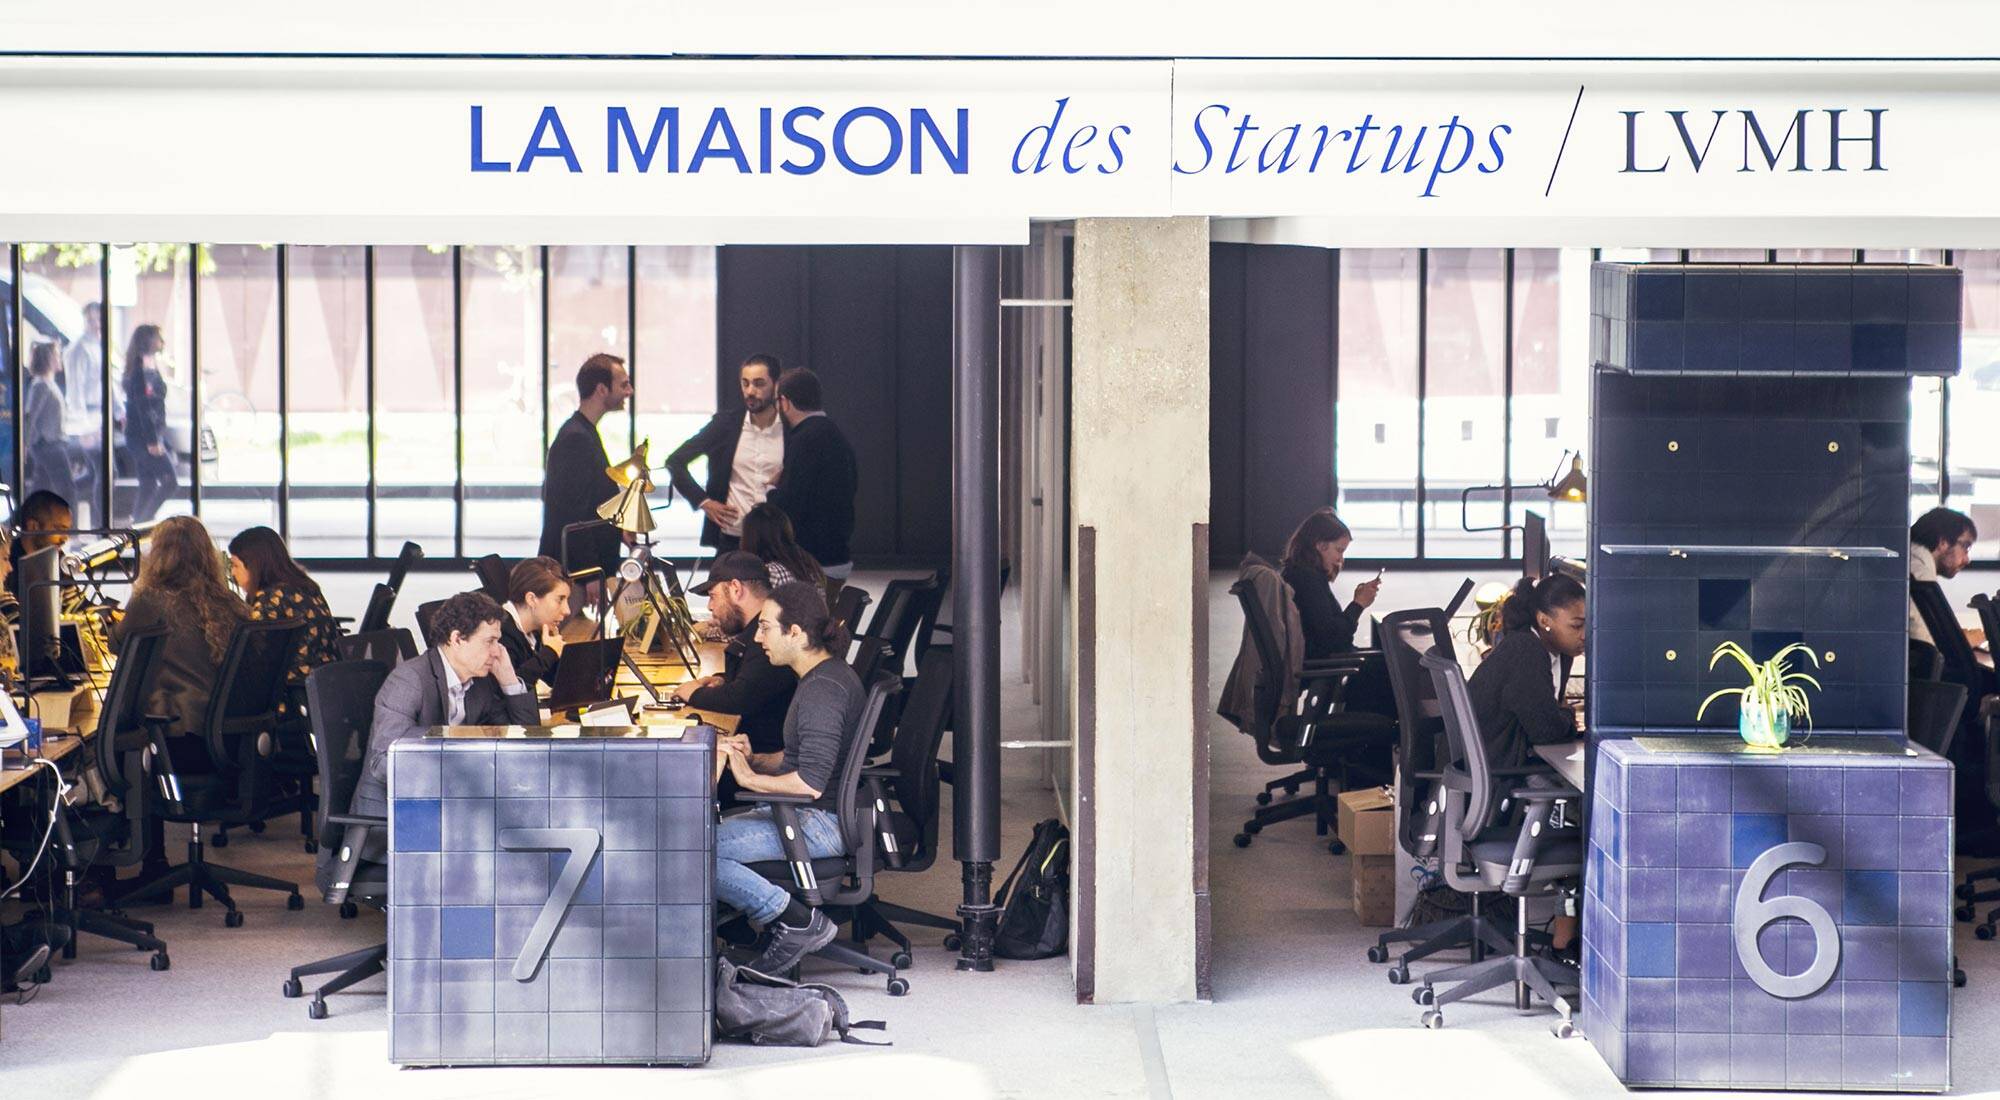 LVMH kicks off Season 3 with new cohort of startups at La Maison